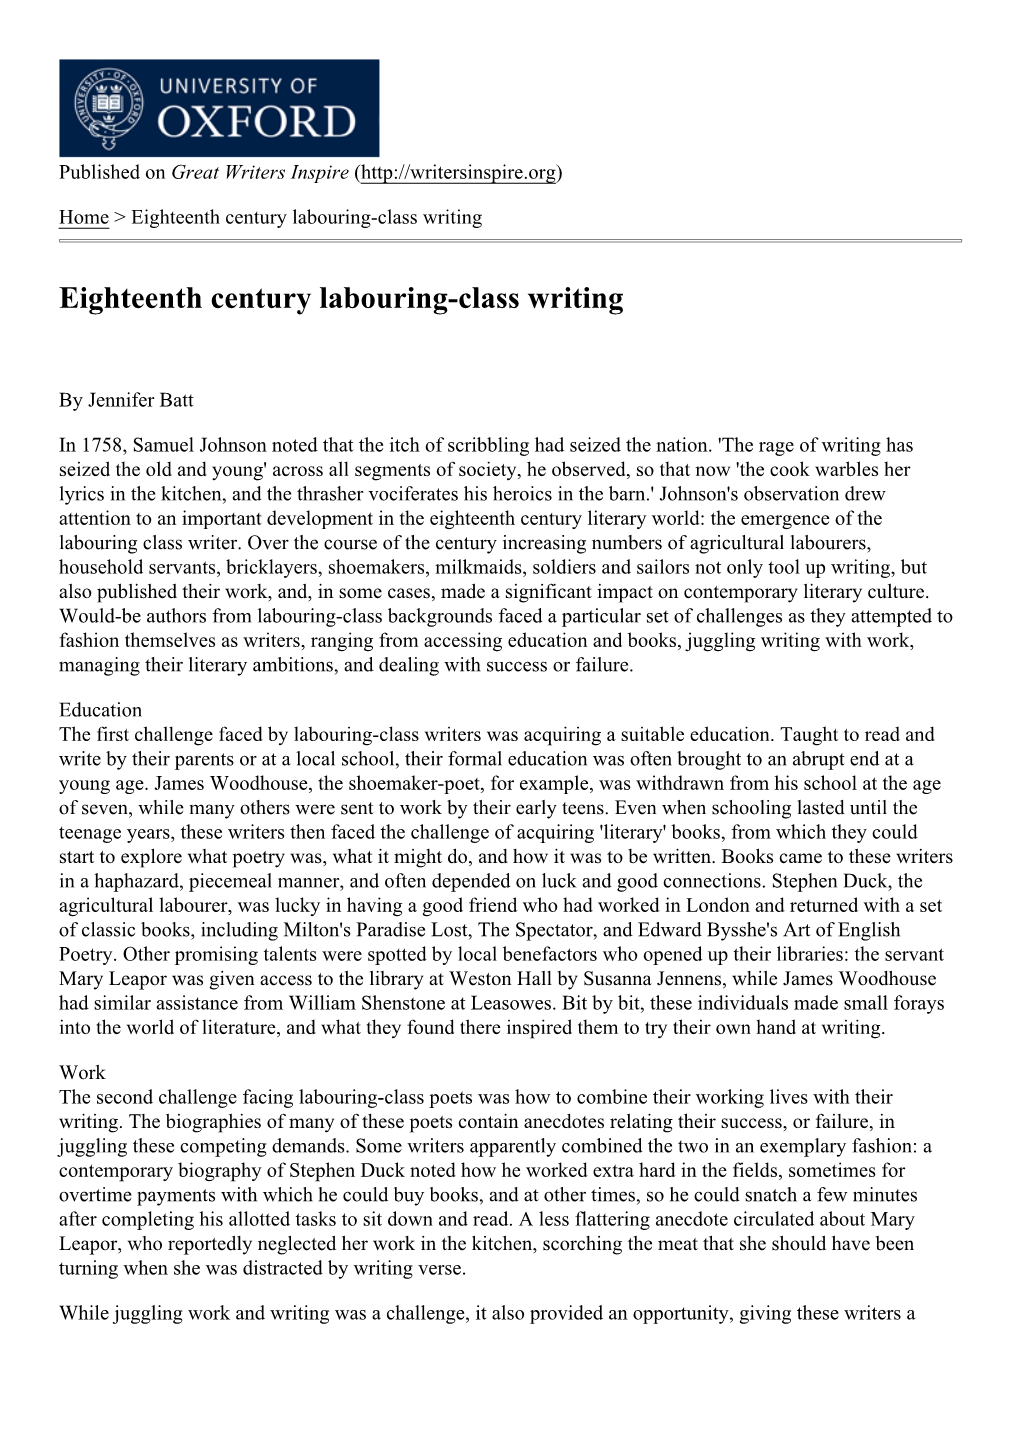 Eighteenth Century Labouring-Class Writing